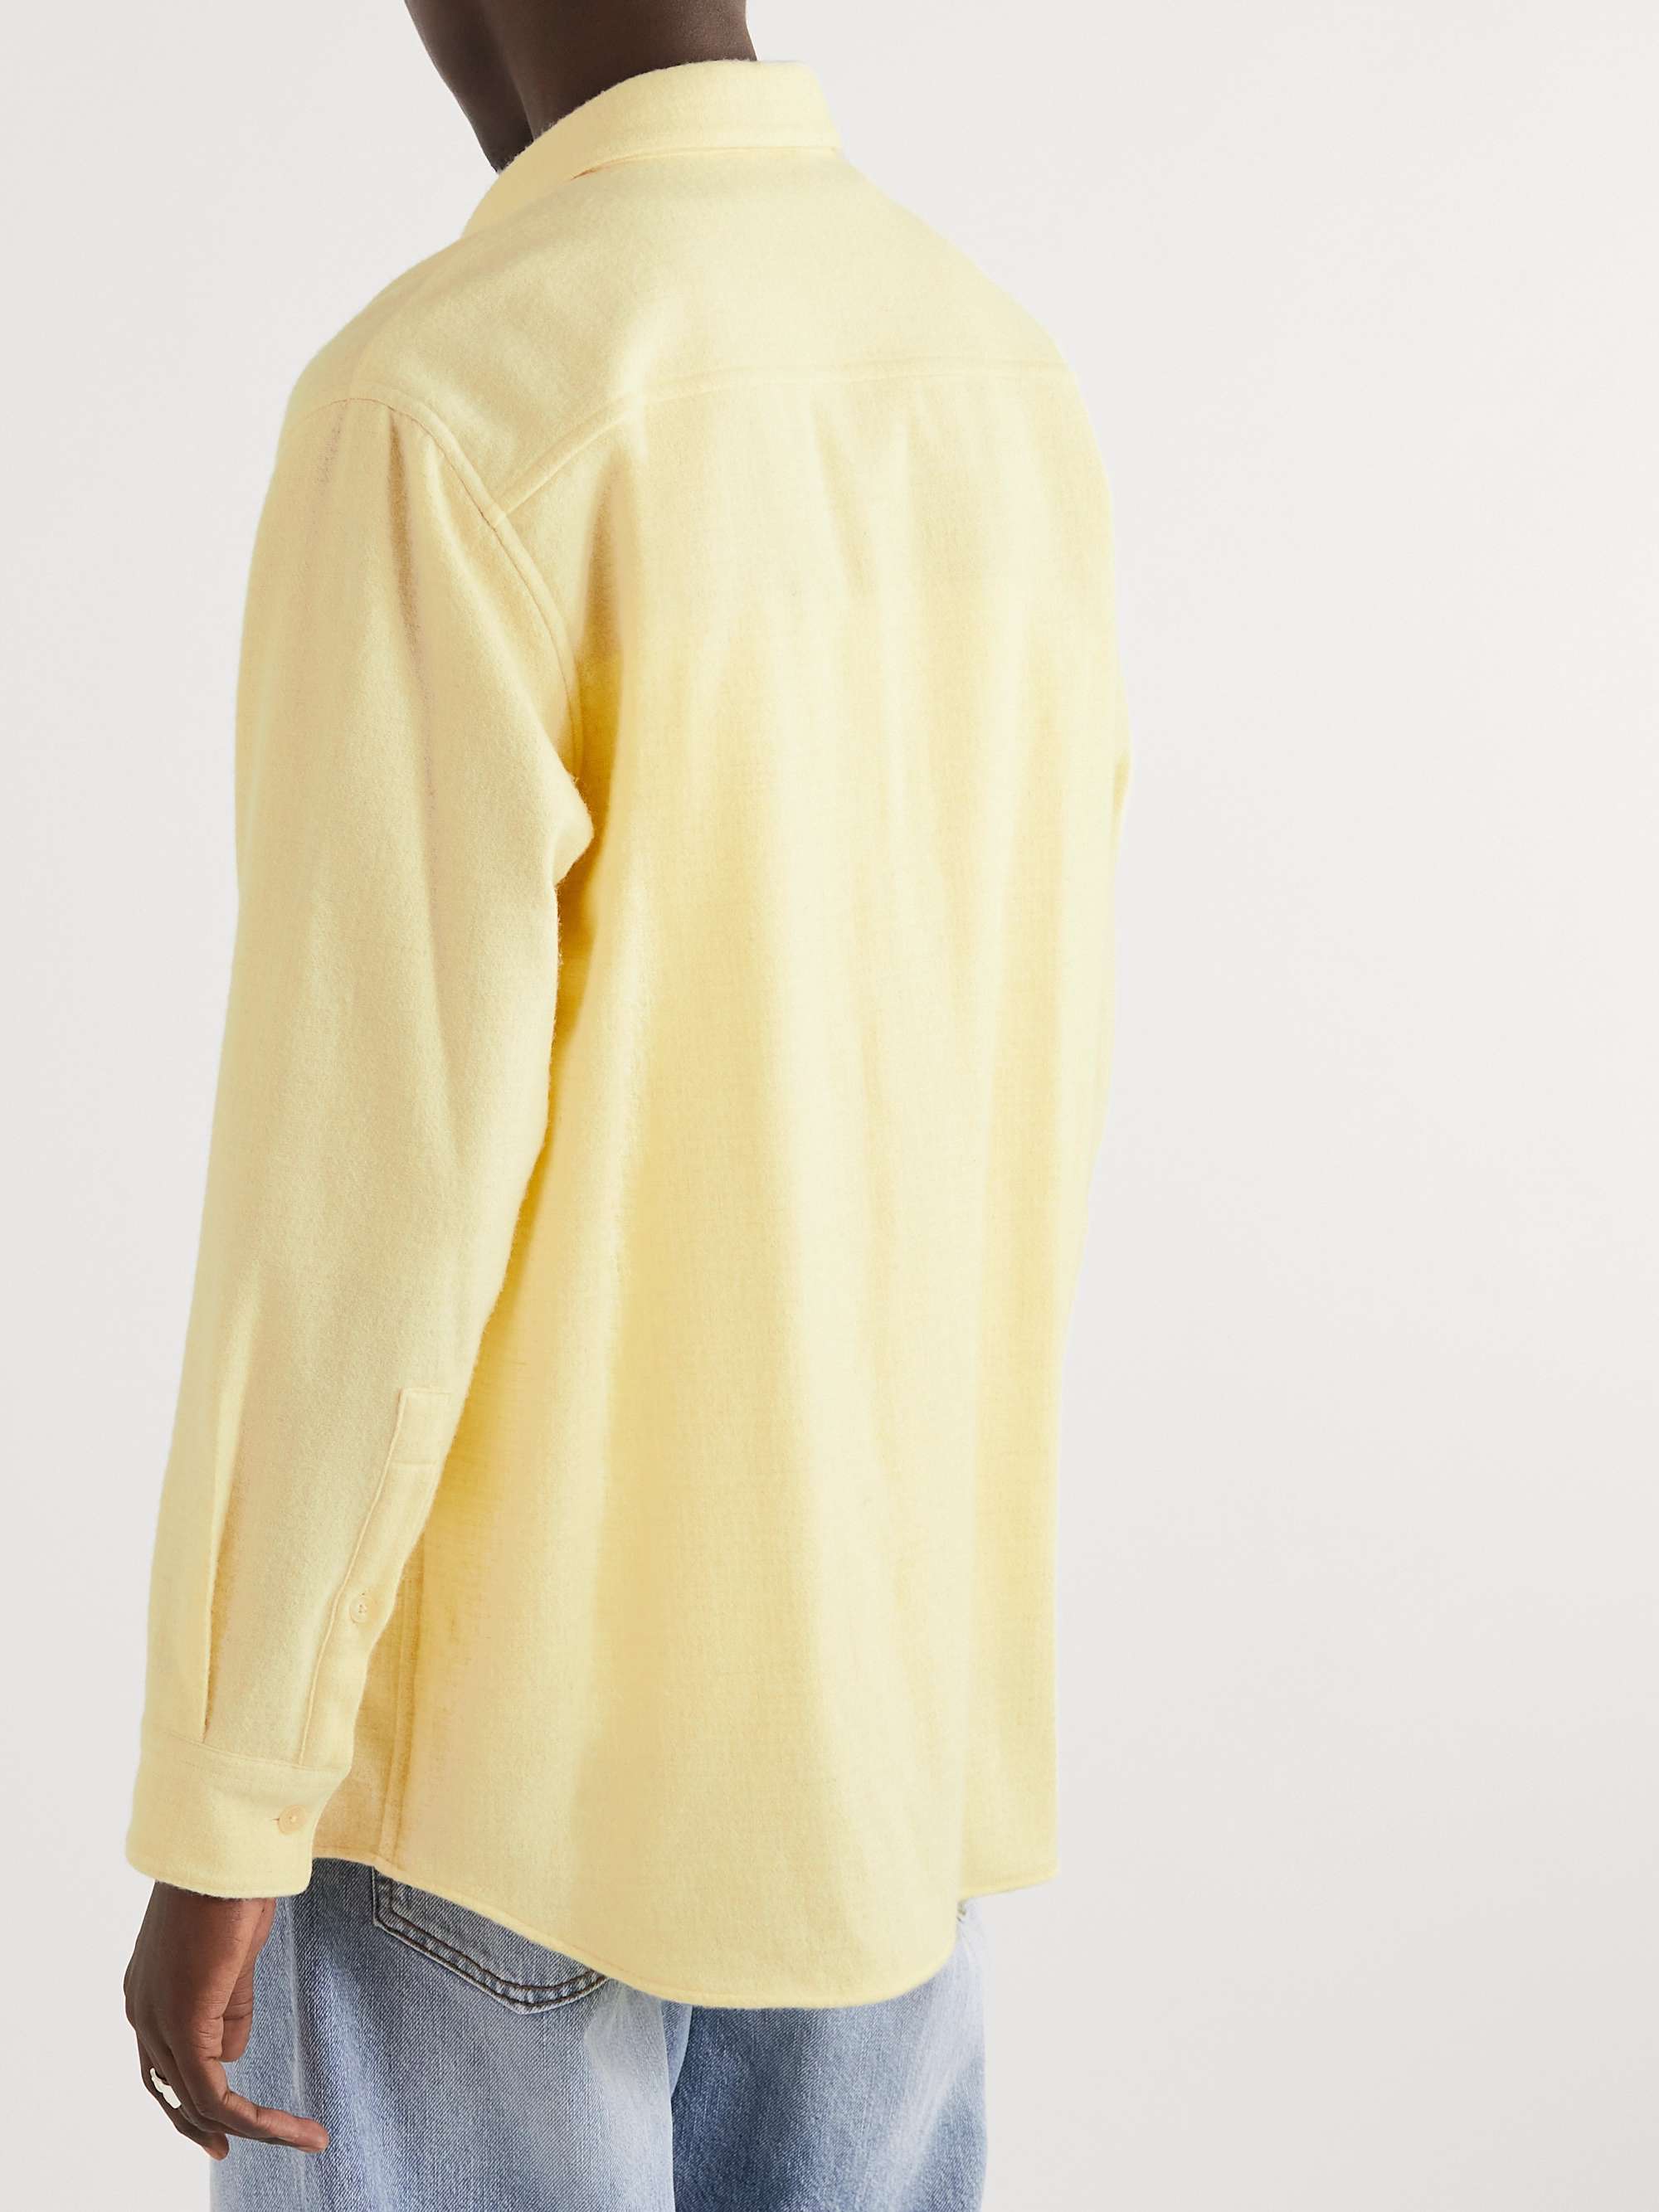 Yellow Wool-Blend Tweed Shirt | AURALEE | MR PORTER